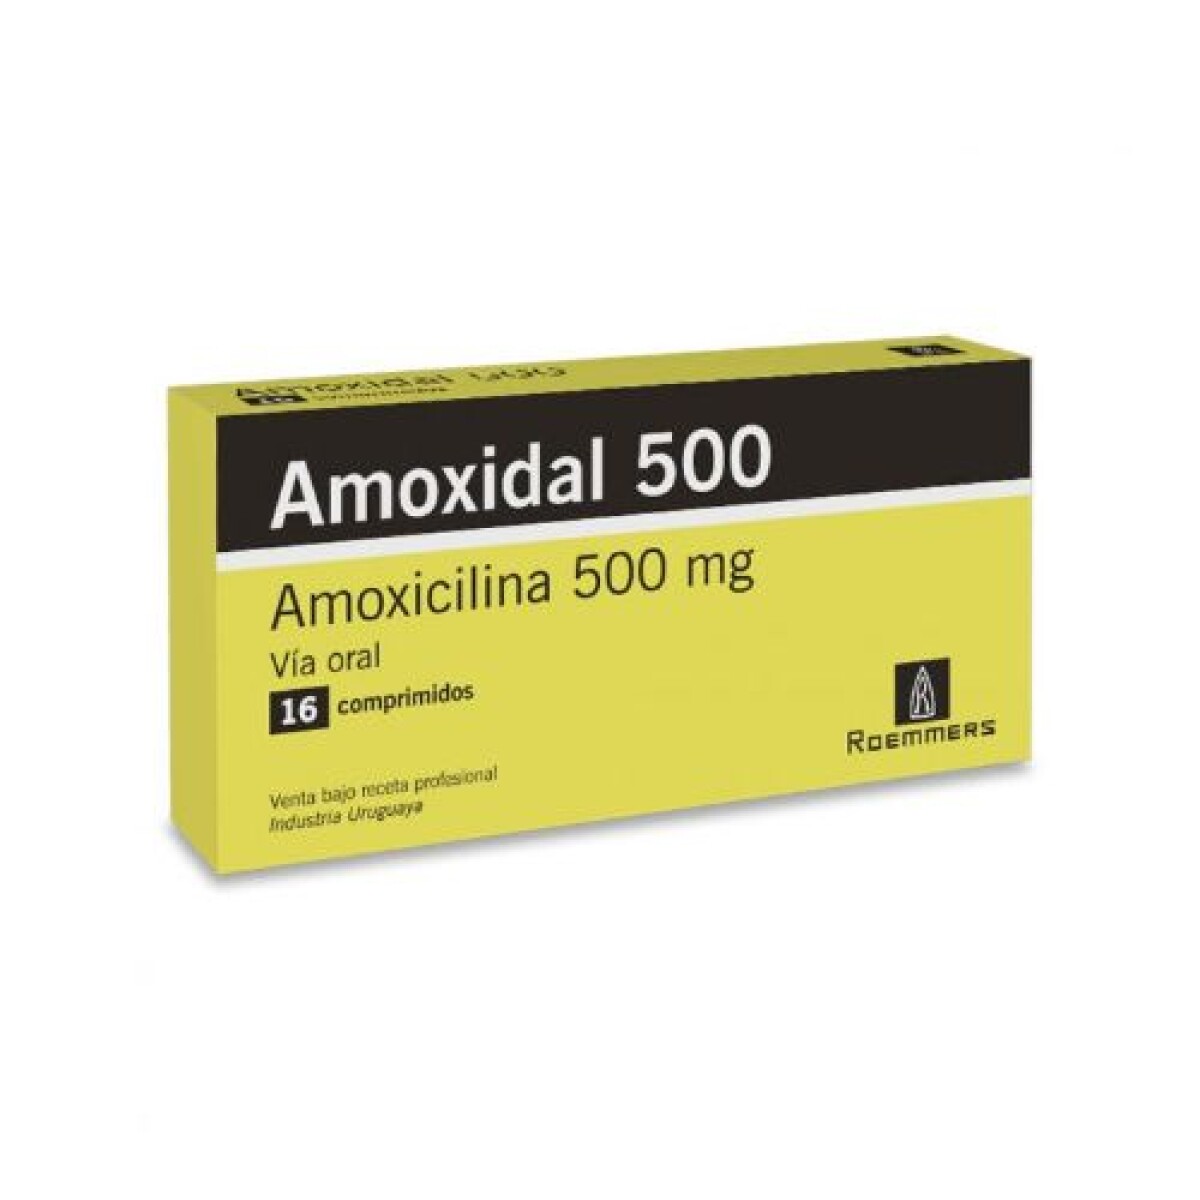 Amoxidal 500 mg 16 comp 